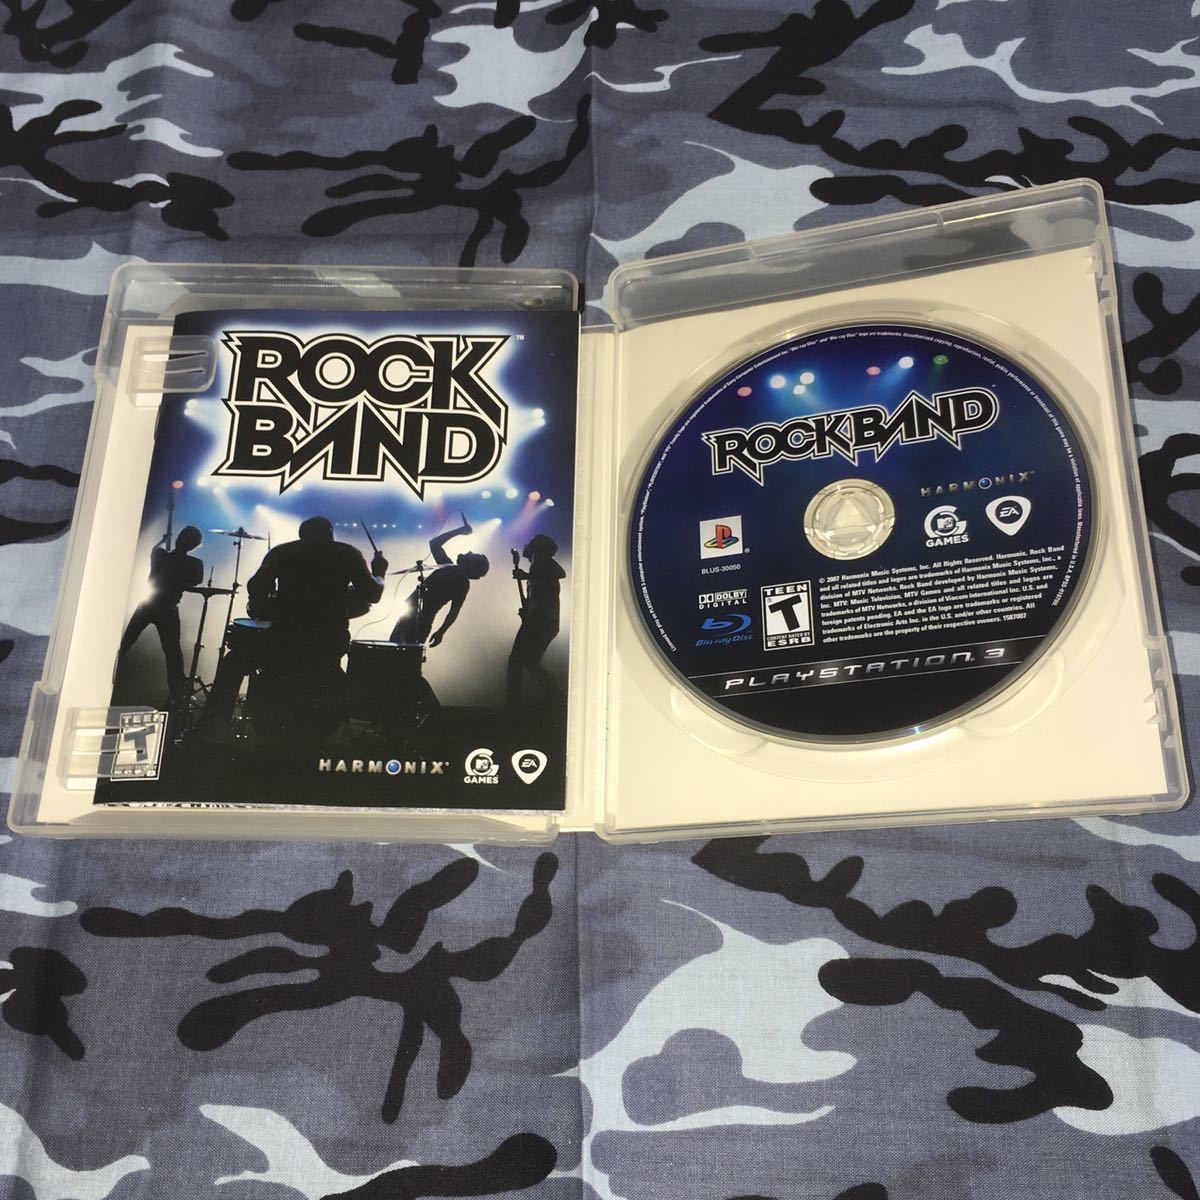 ROCKBAND 北米版 PS3 動作確認済み 送料無料 匿名配送 PlayStation3 プレイステーション3 プレステ3 輸入版 海外版 ROCK BAND